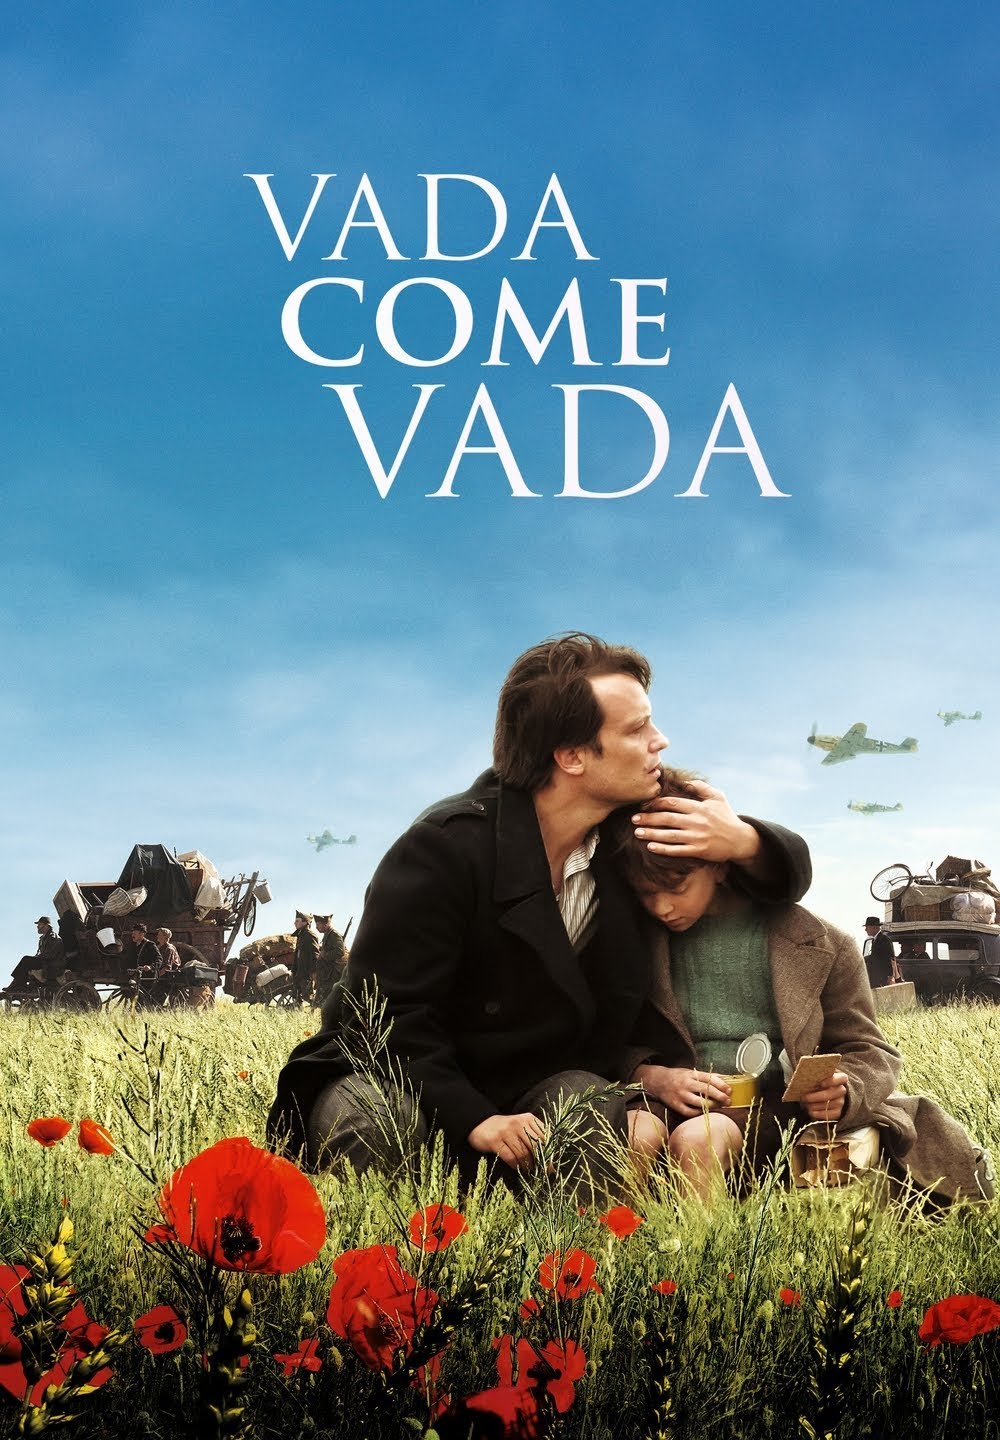 Vada come vada [HD] (2015)